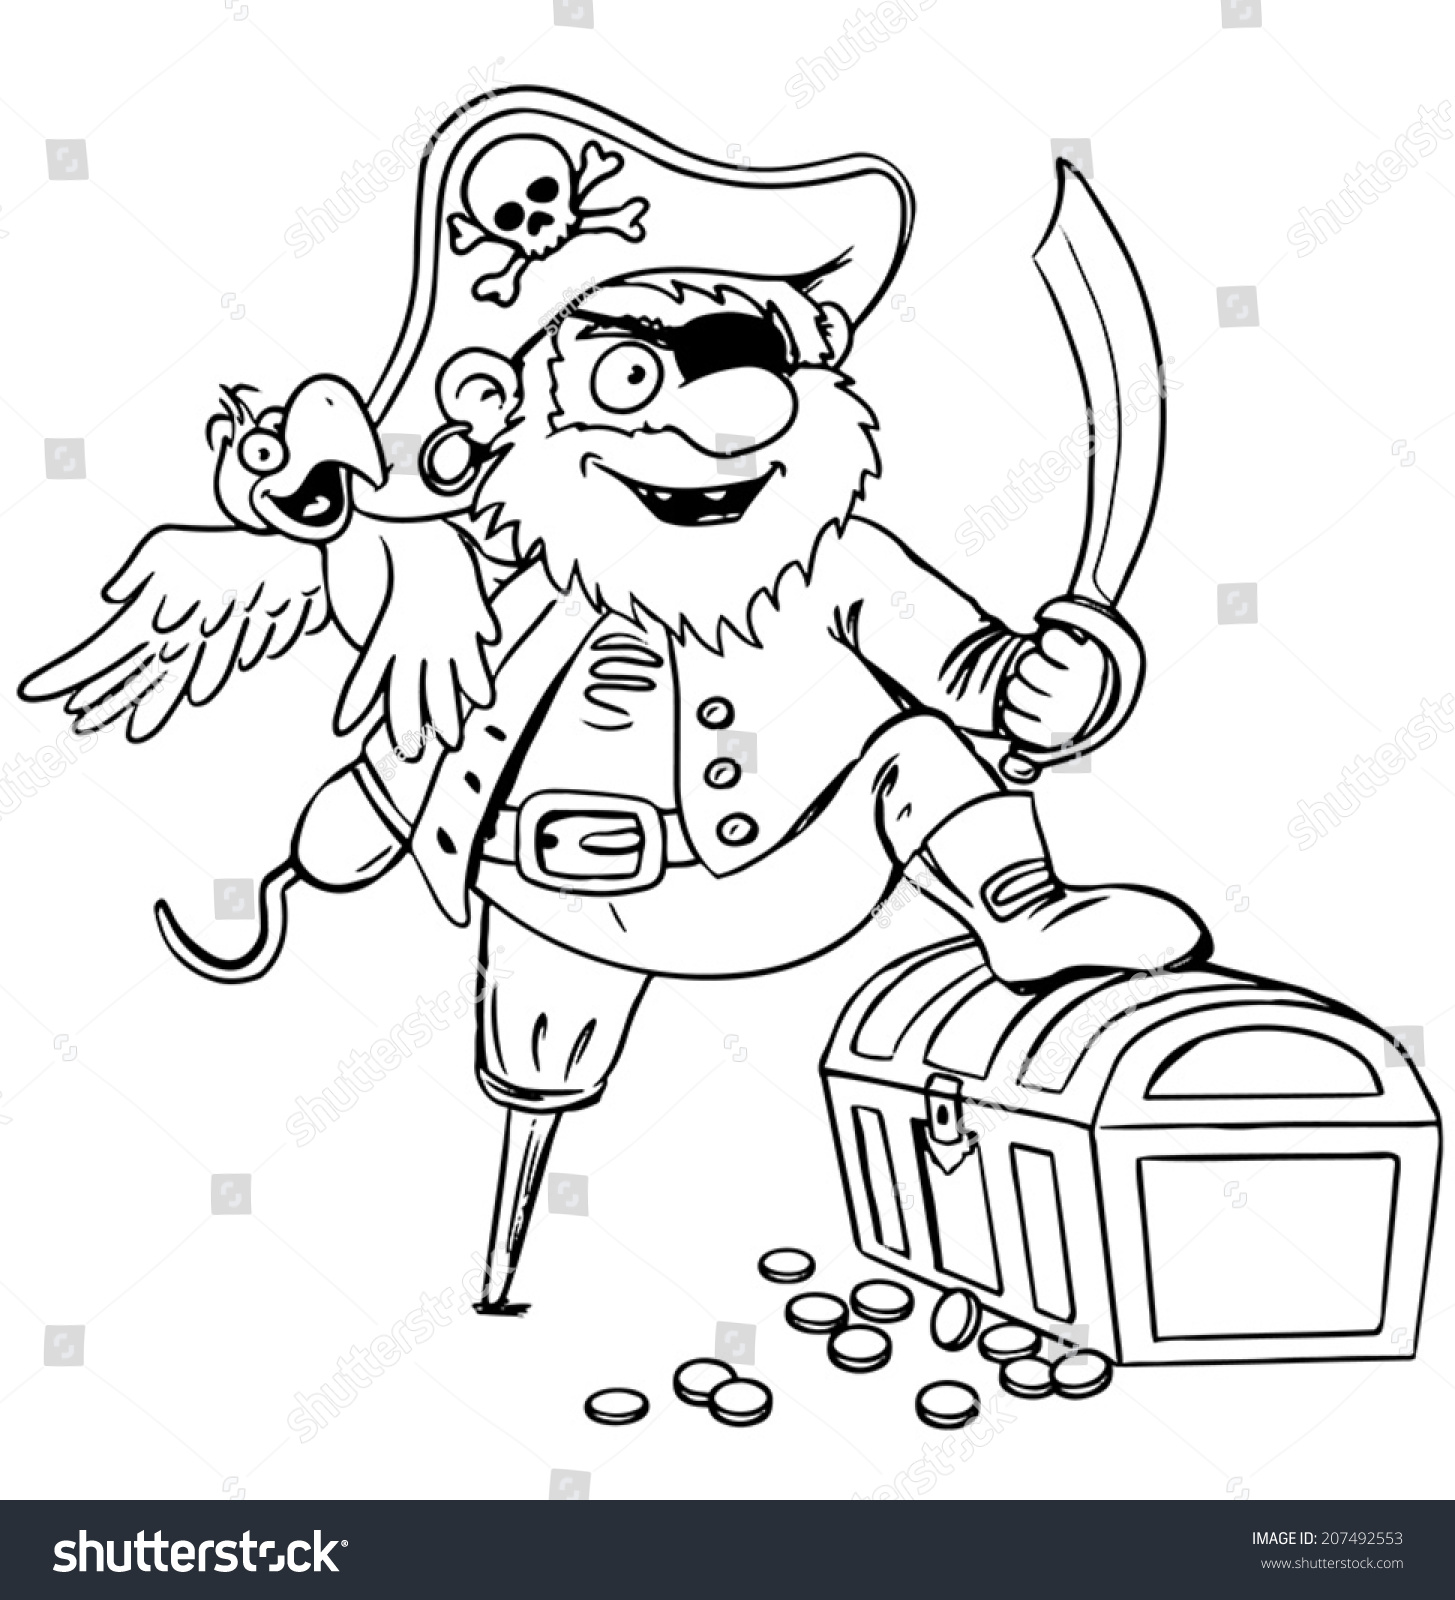 Рисунок пирата карандашом смешной